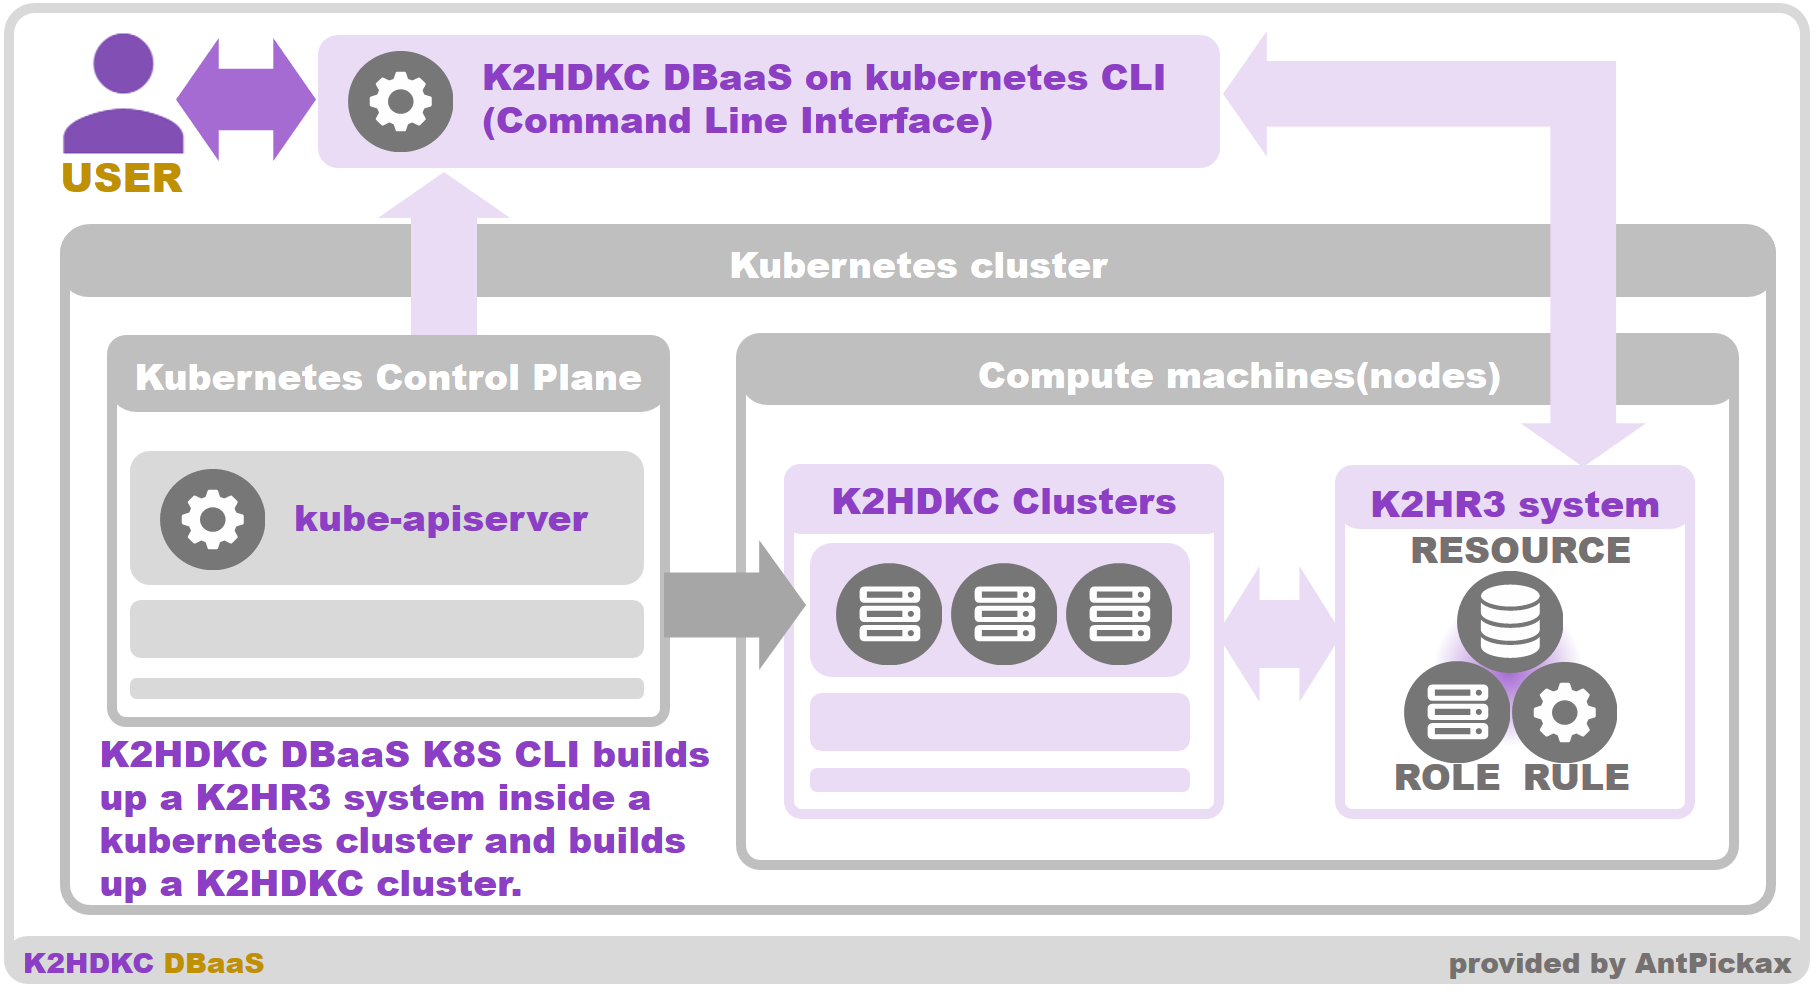 K2HDKC DBaaS on kubernetes CLI Overview